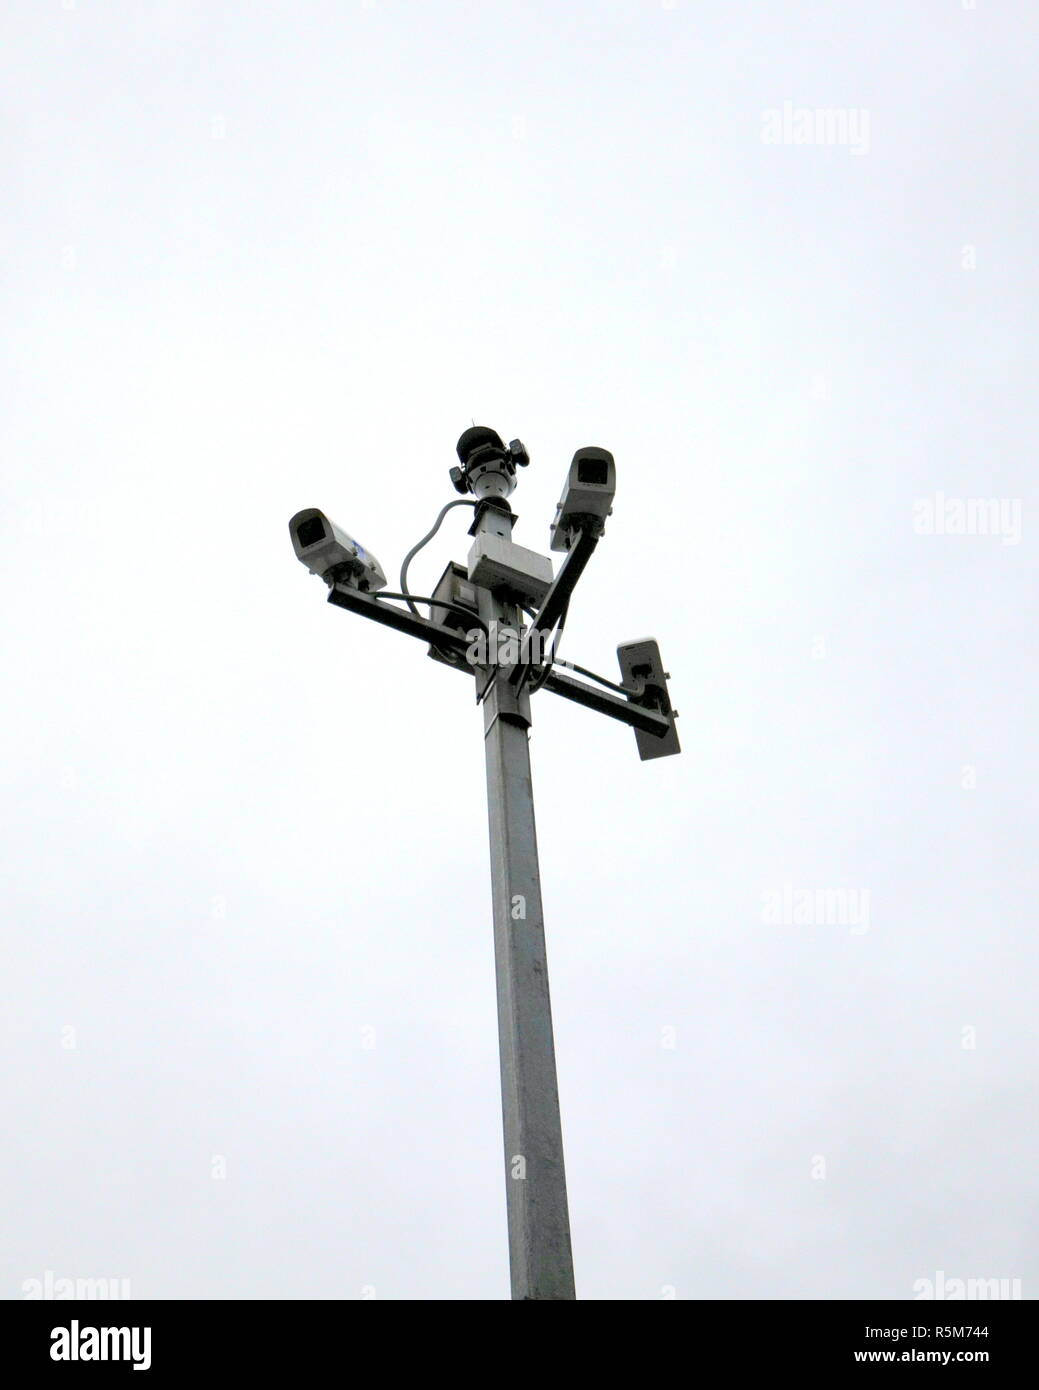 surveillance  security video cameras on a pole Stock Photo